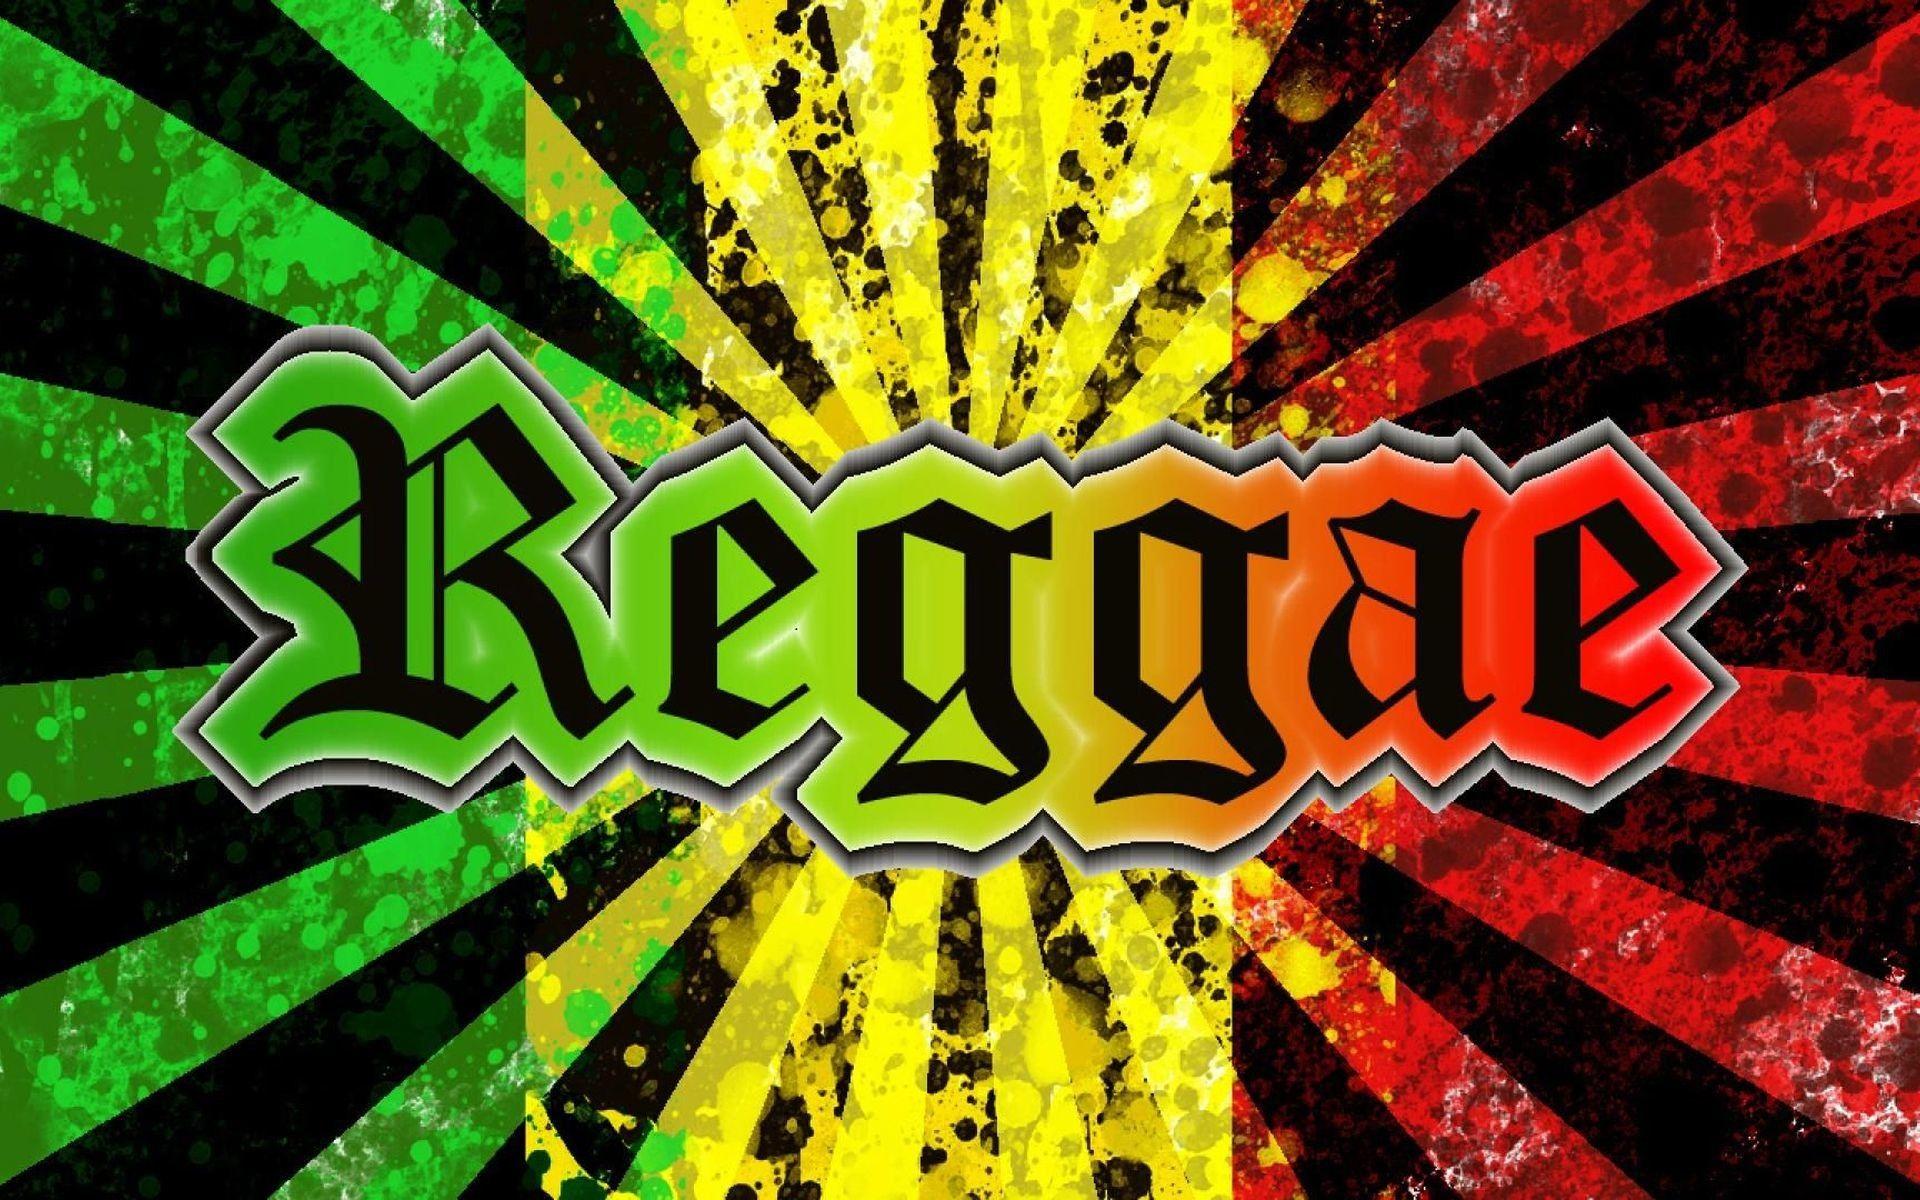 Reggae Background